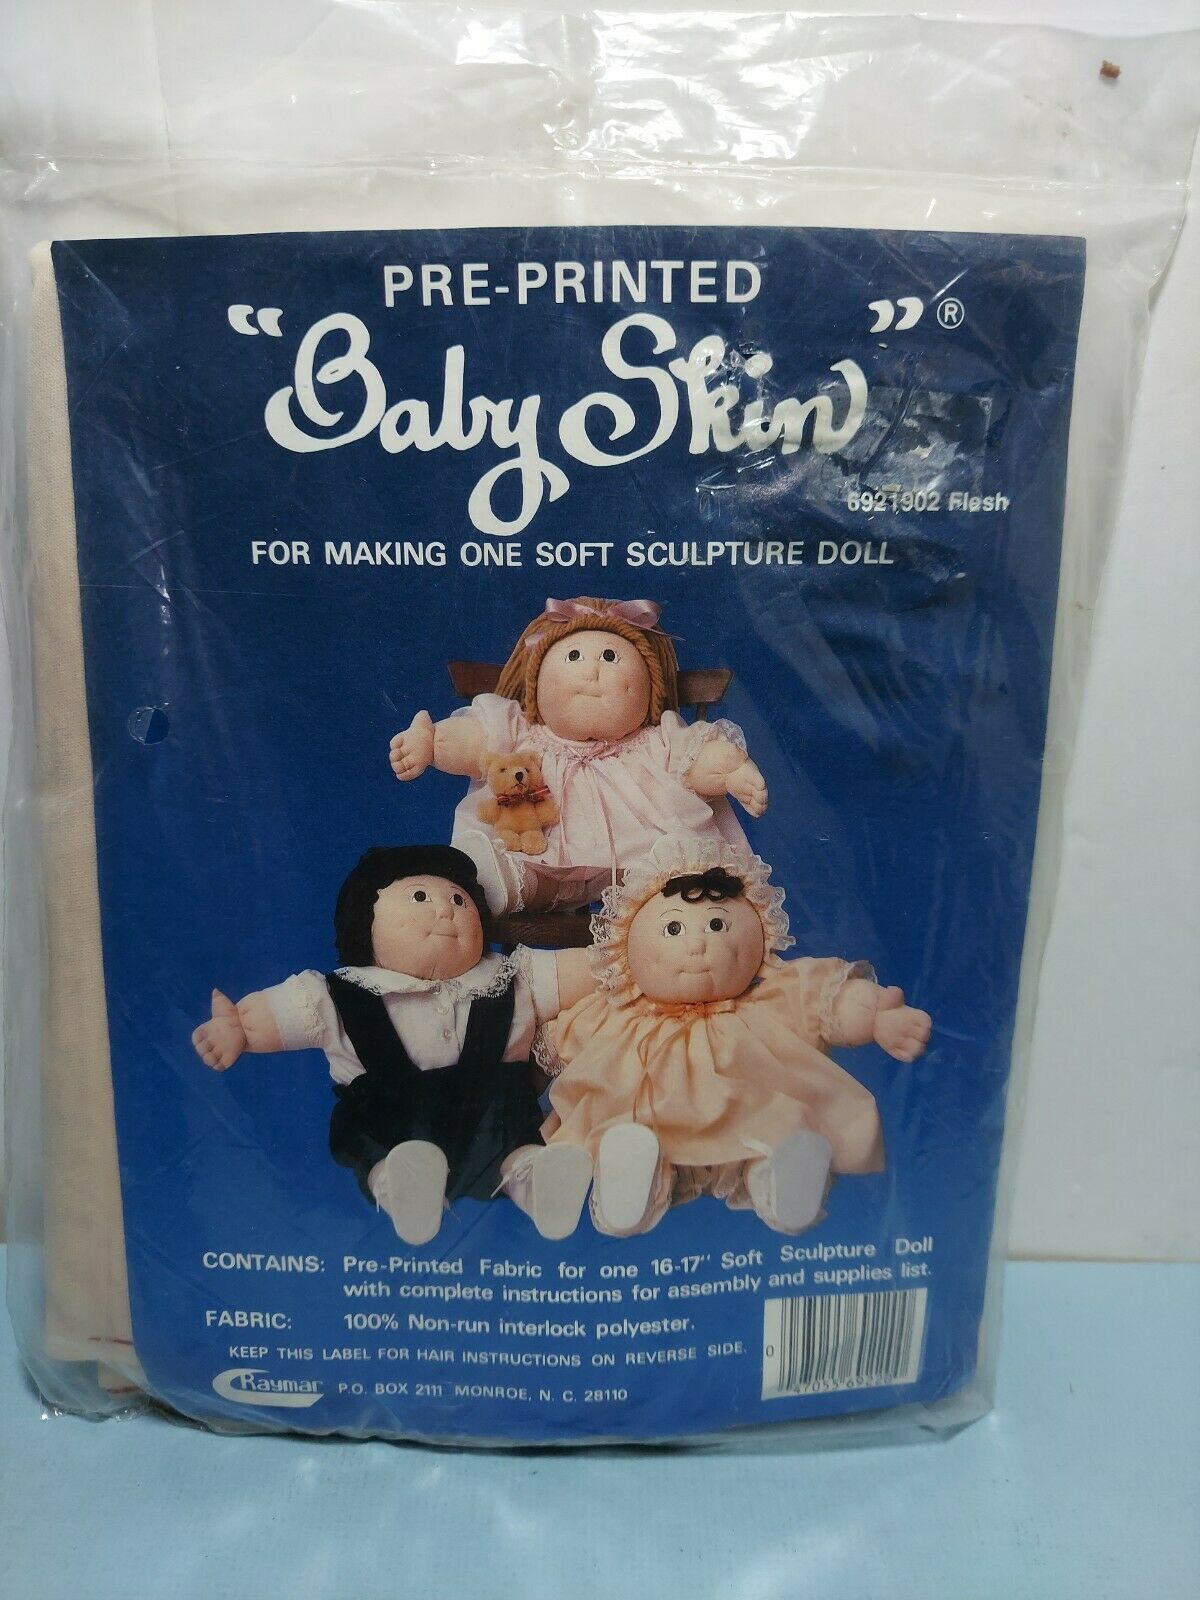 Vintage 1980s Pre Printed Baby Skin for Making Soft Sculpture Doll 6921902 Flesh